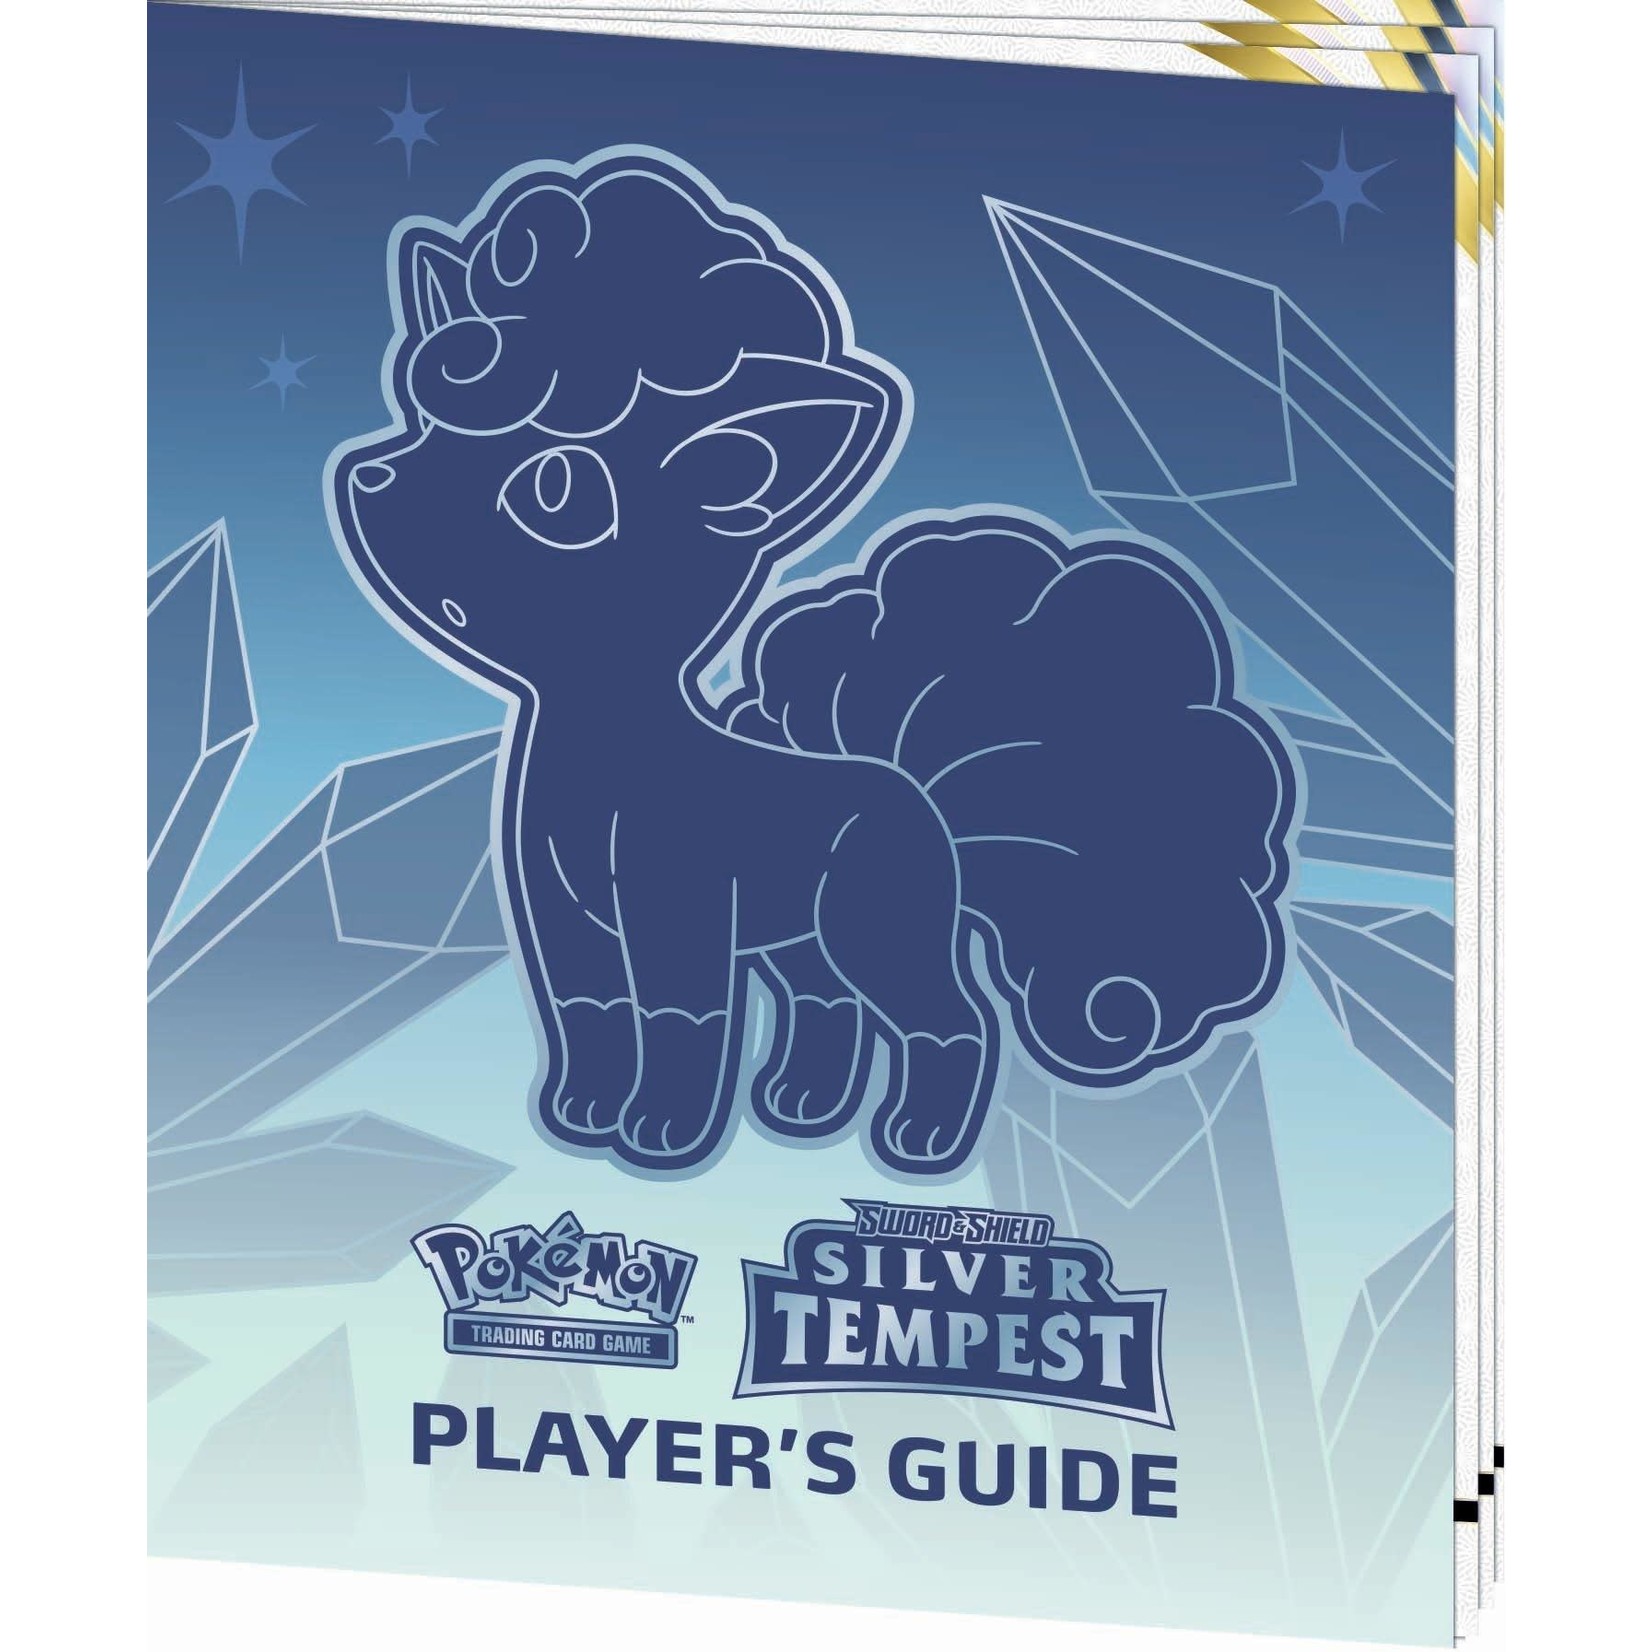 Pokémon Pokémon TCG: Silver Tempest - Elite Trainer